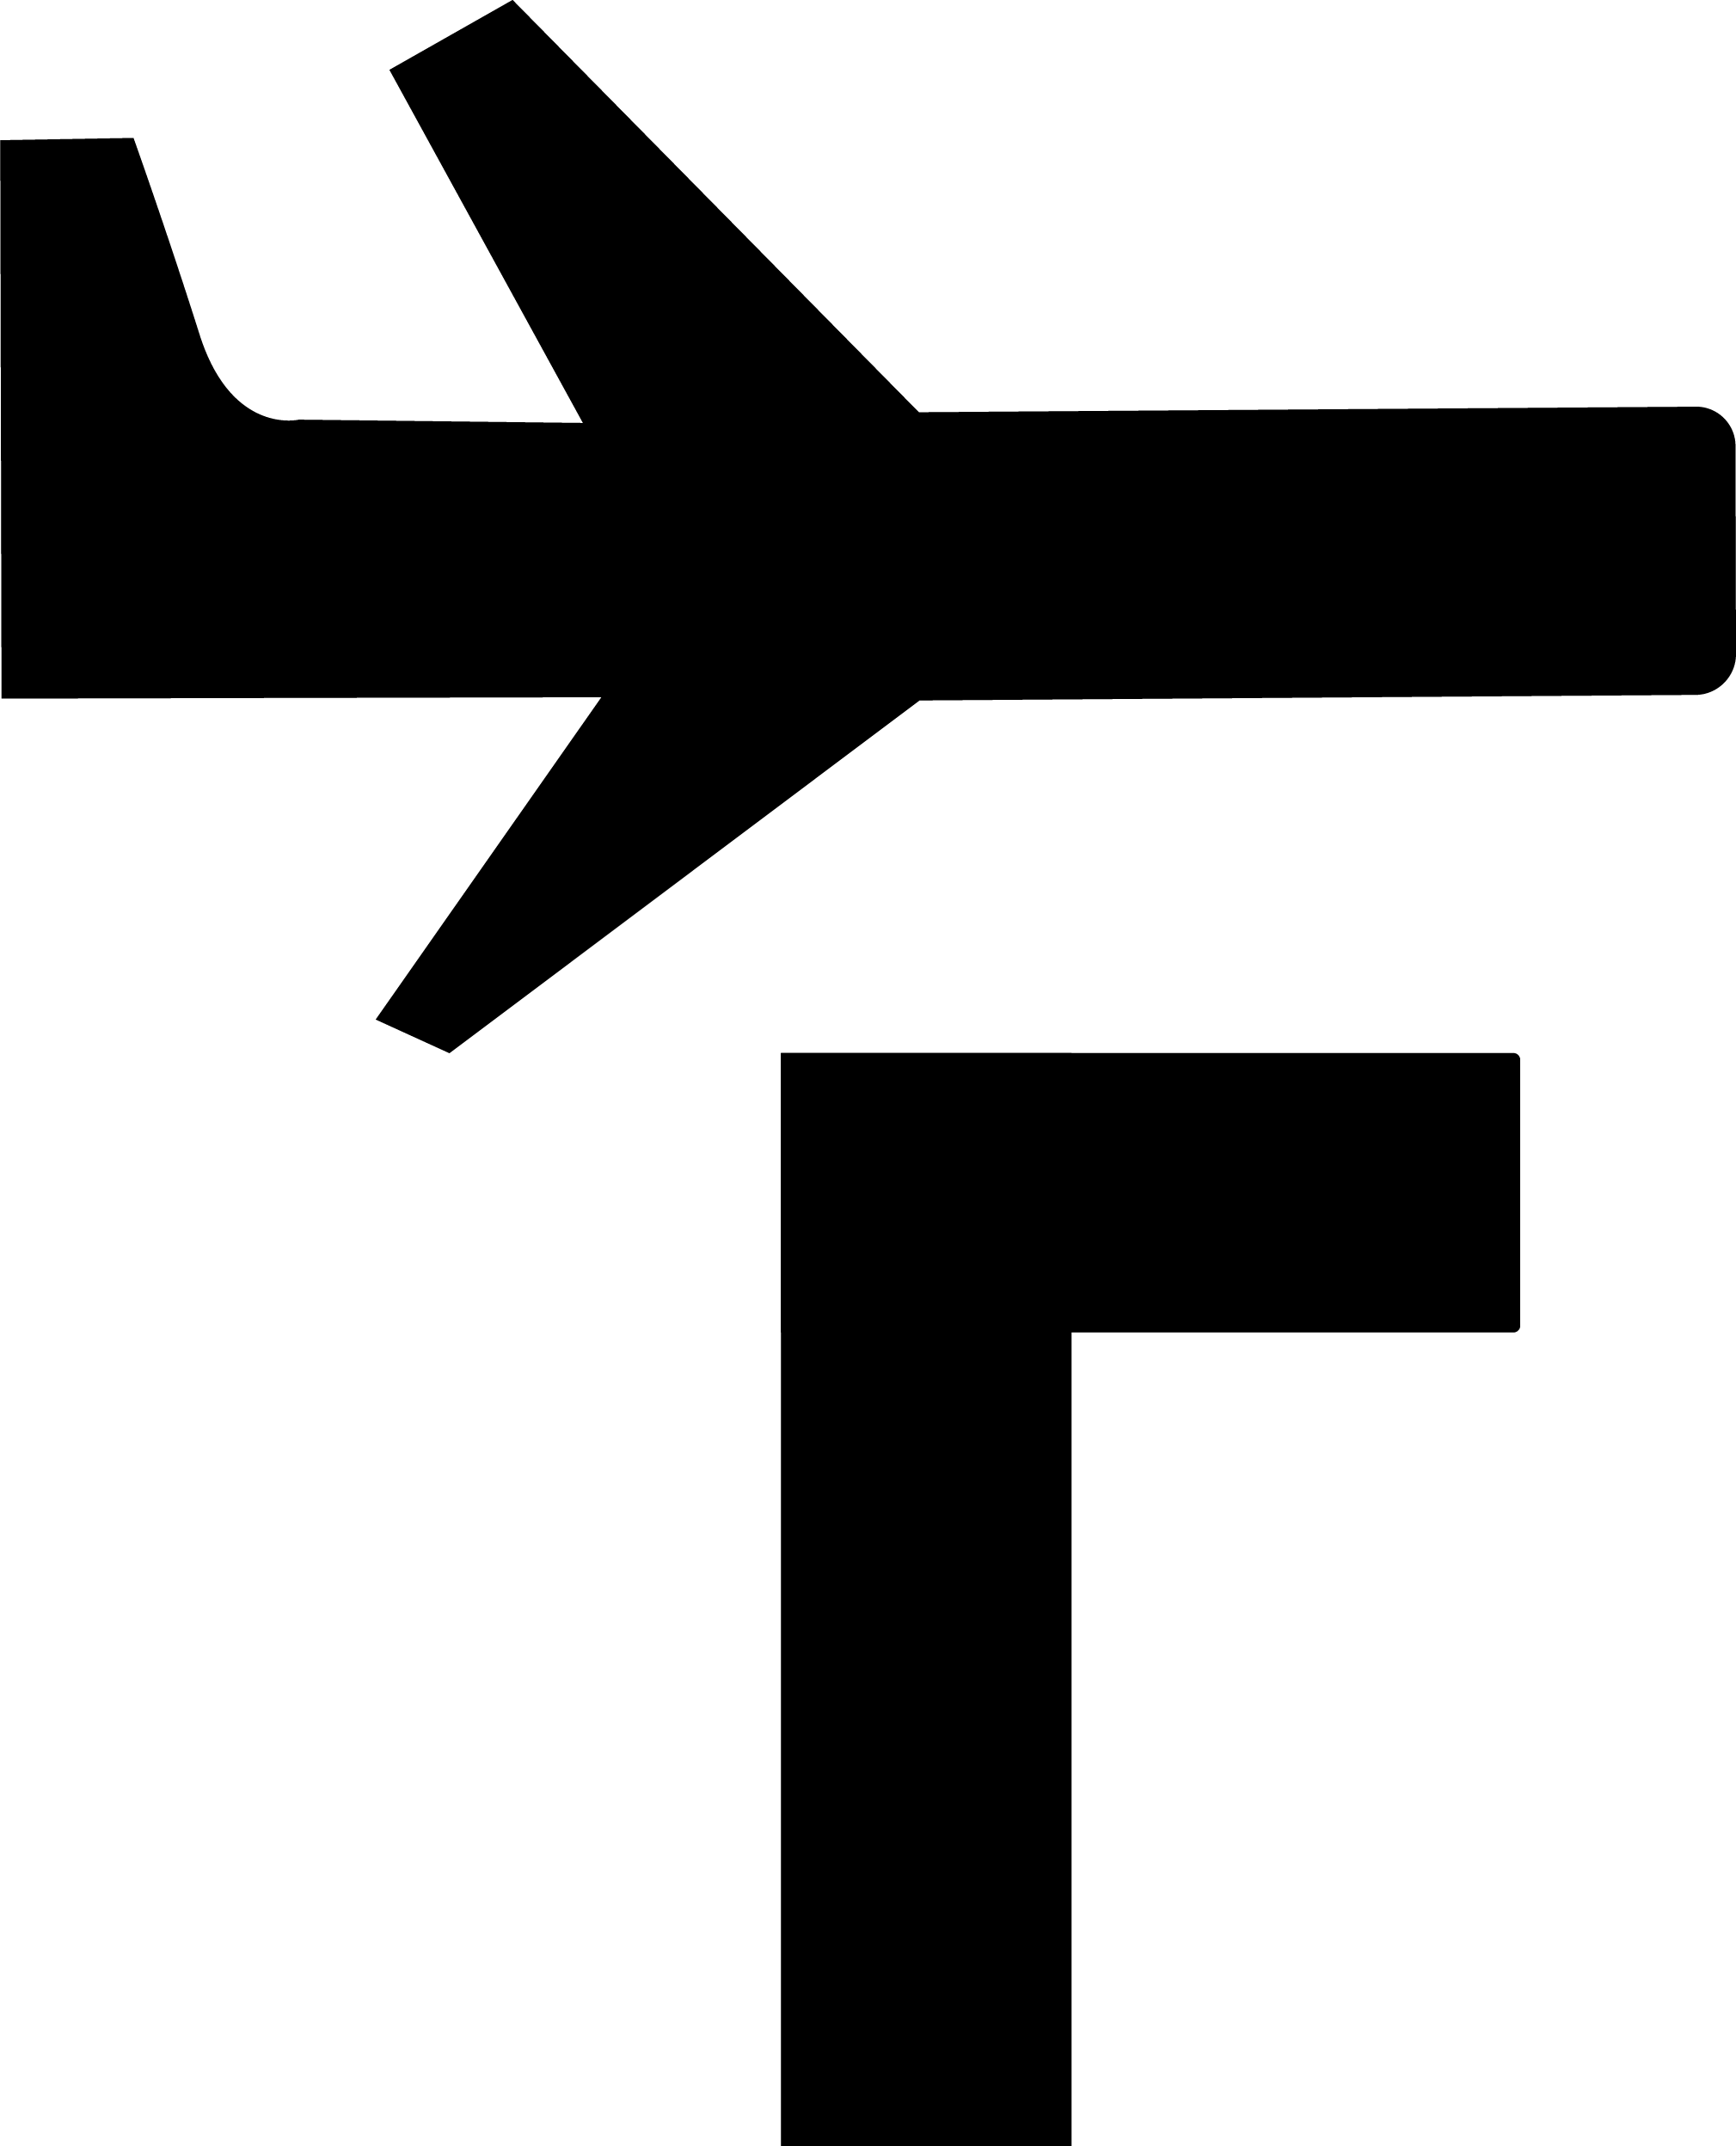 Flytrippers logo